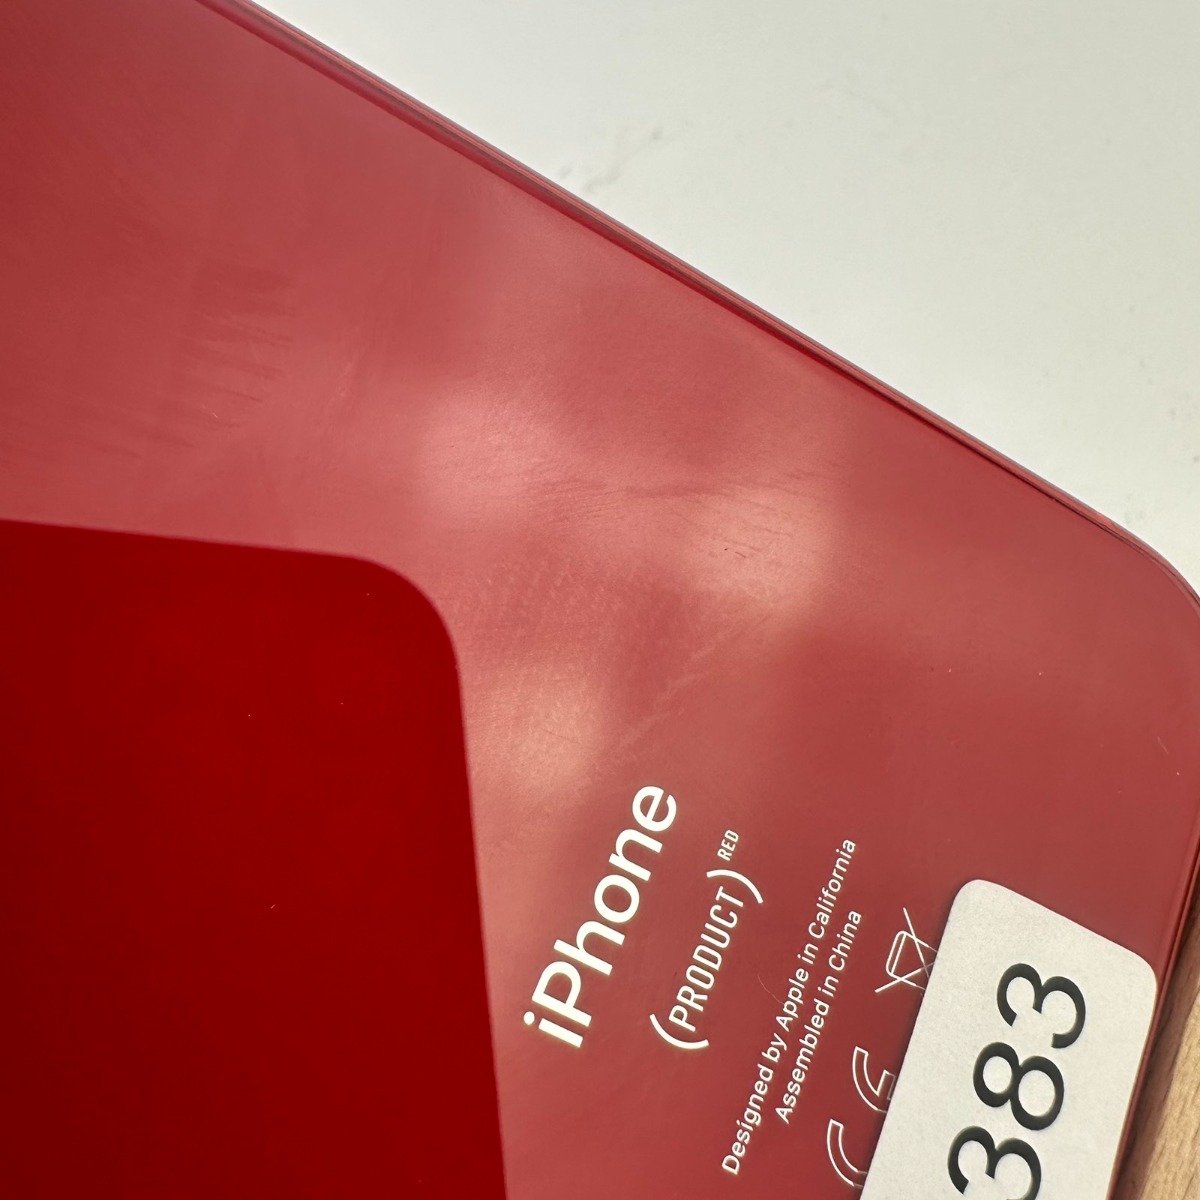 Apple iPhone XR 128GB Red Б/У №1383 (Стан 8/10)